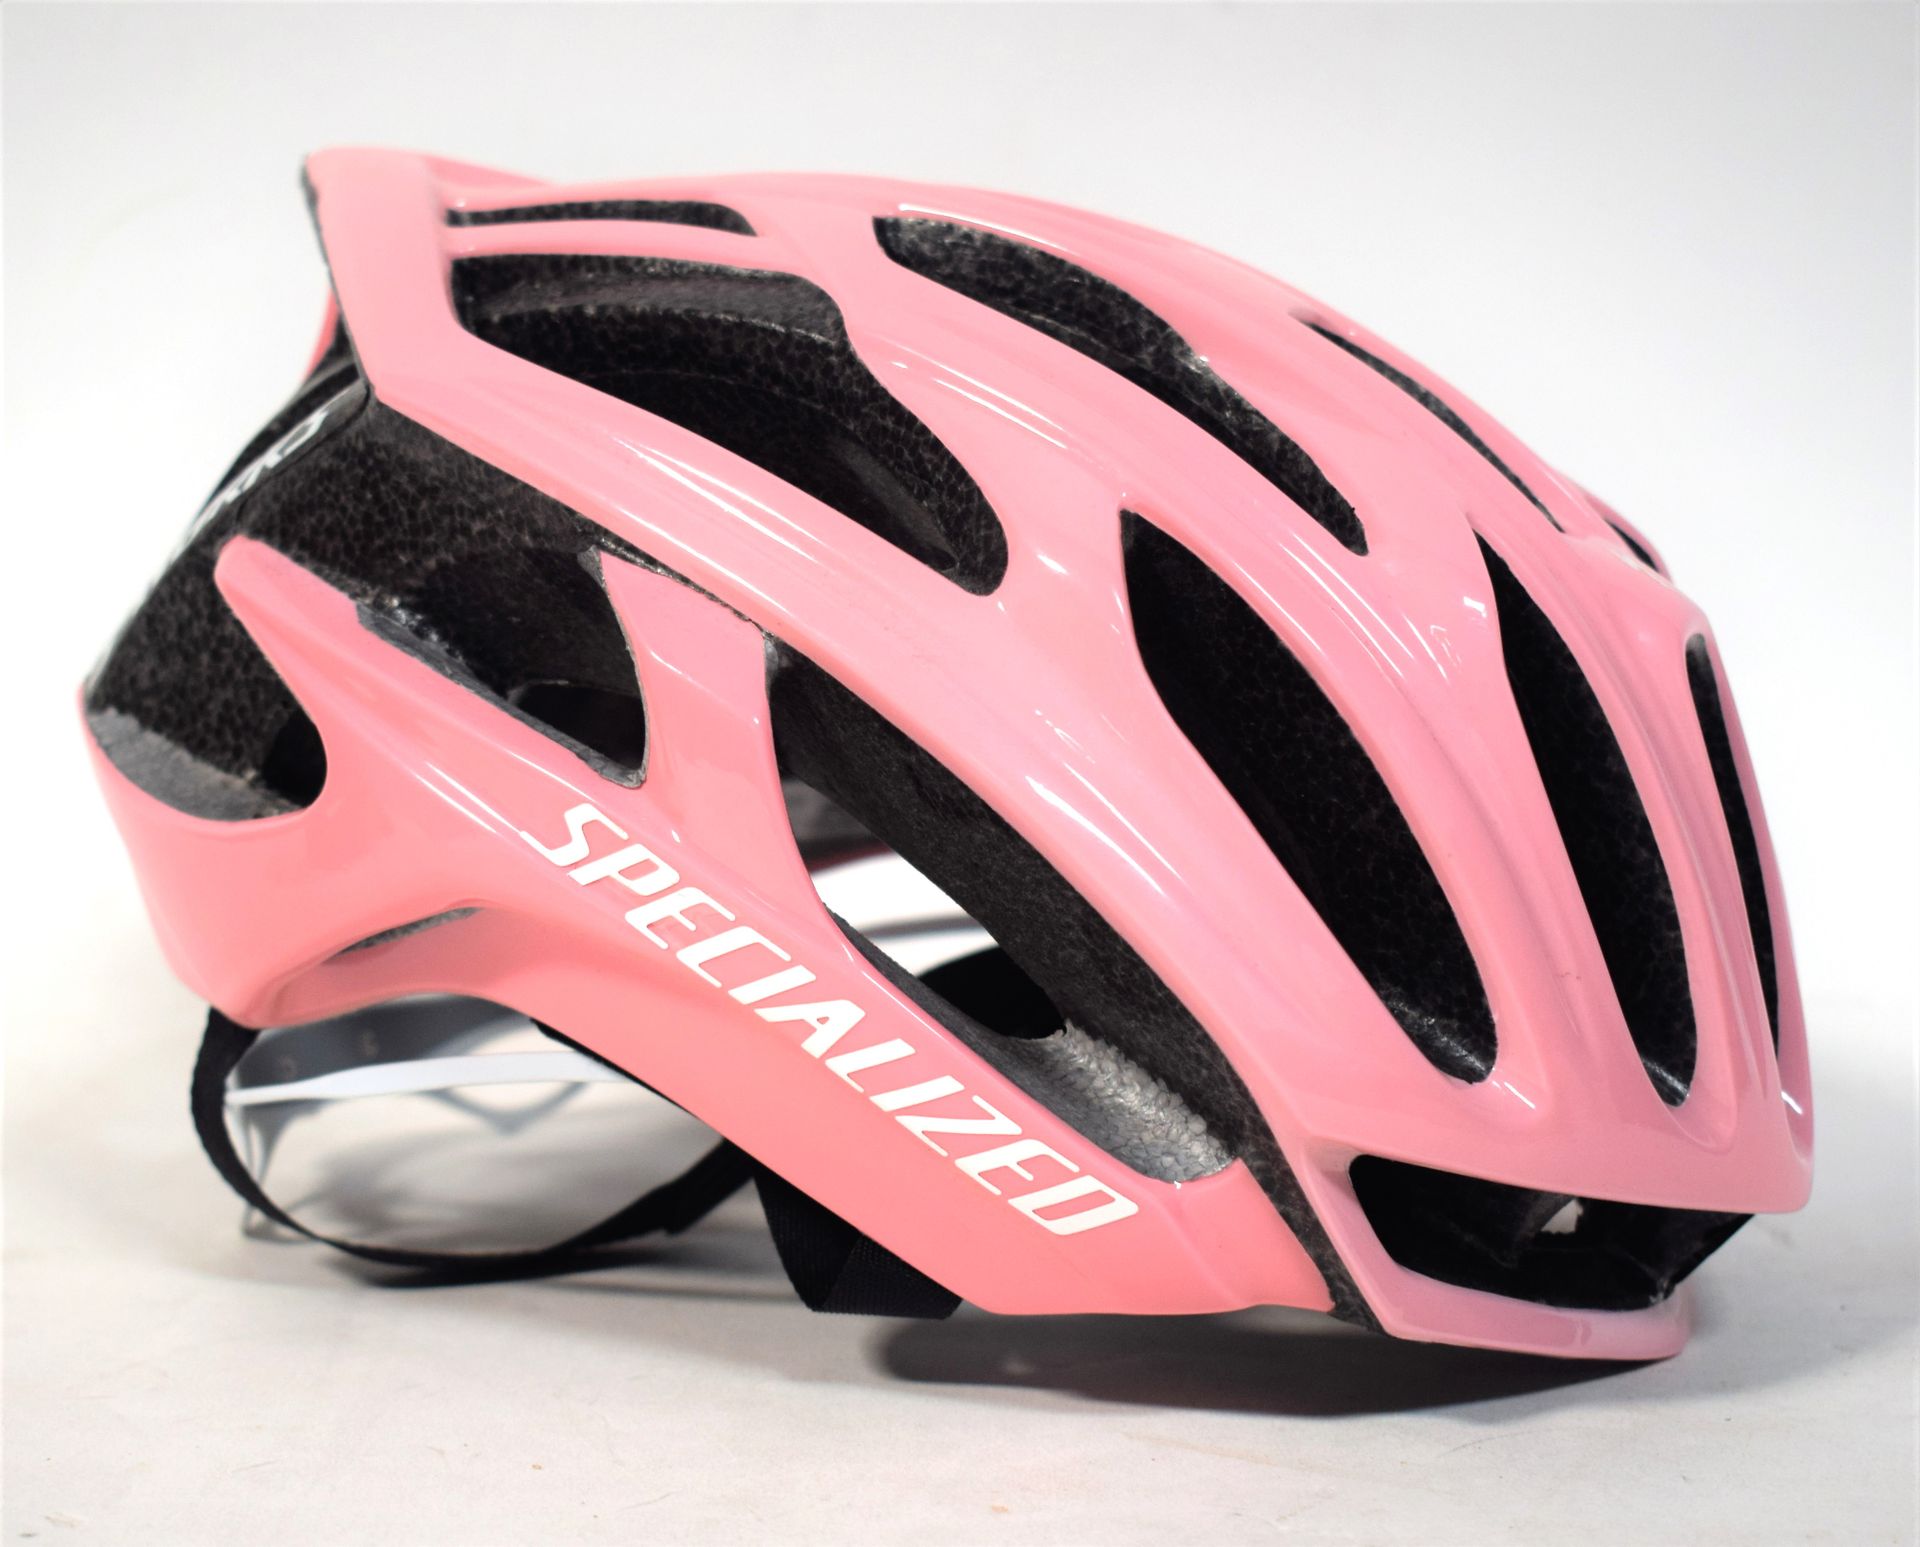 Null (自行车)卢森堡职业自行车手Bob JUNGELS(快步车队)的头盔，在2019年环意自行车赛中佩戴，粉色，状态良好，品牌为Specialized。
&hellip;